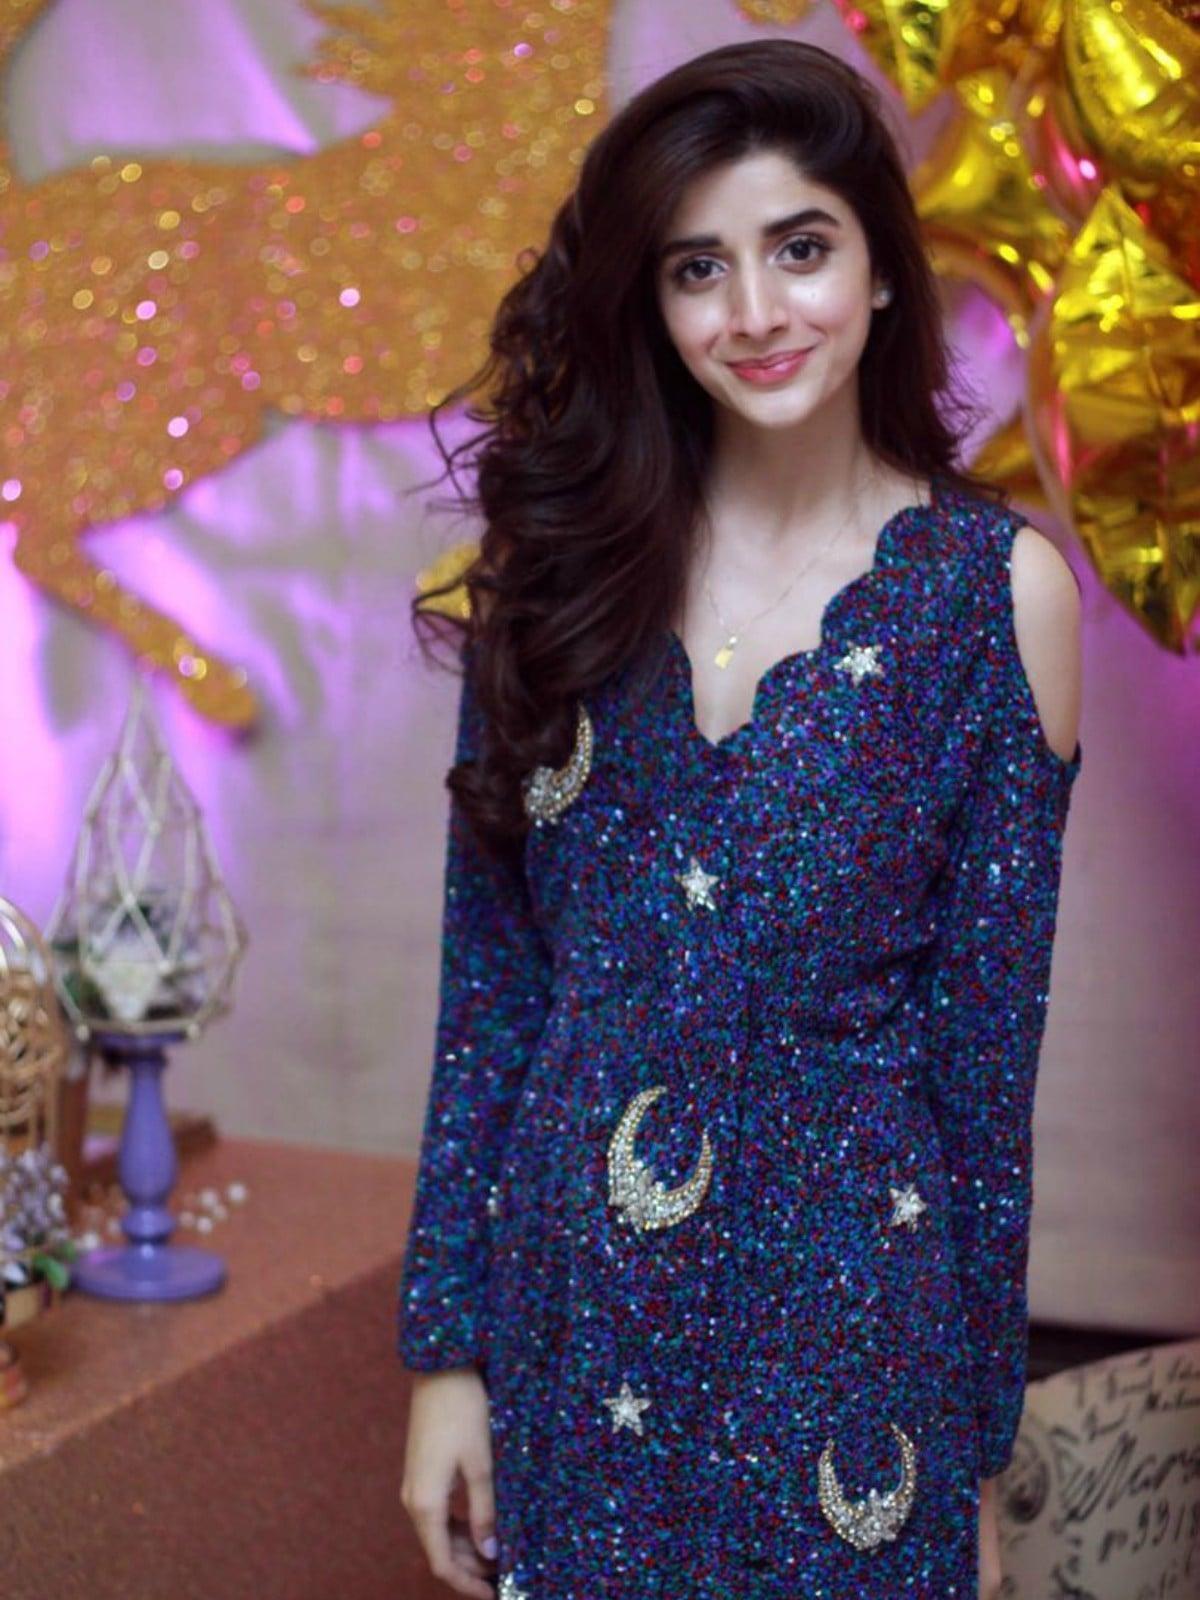 Mawra's Night Sky Inspired Dress Is By Amira Haroon